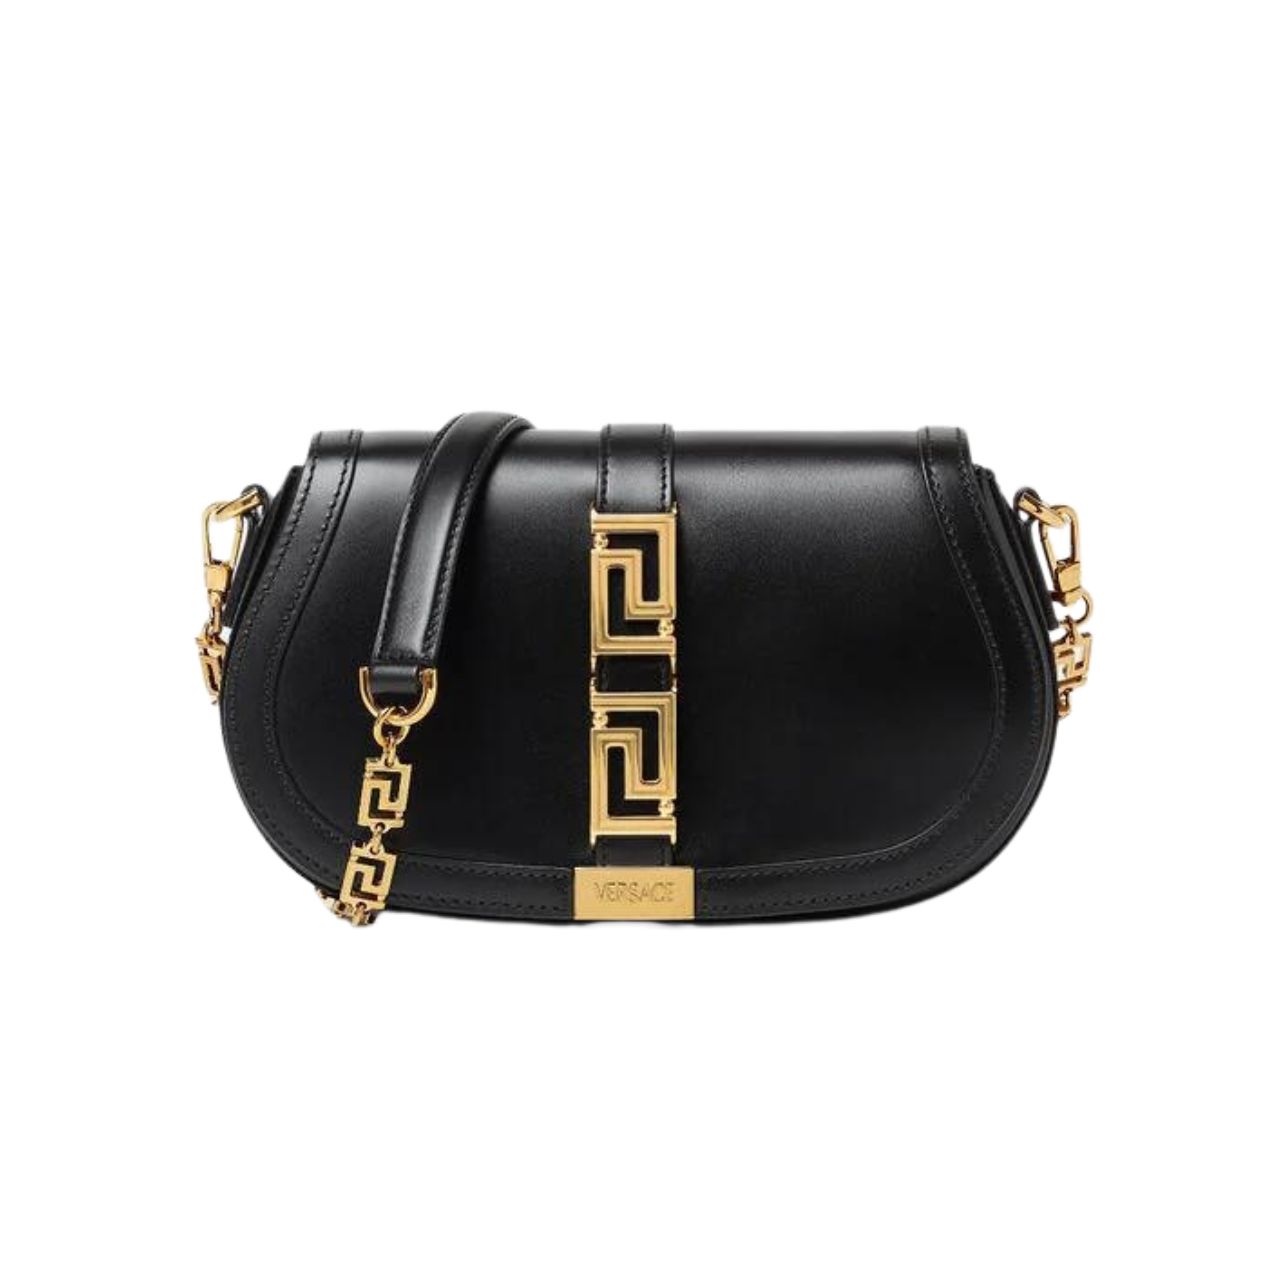 Black handbag with gold detailing